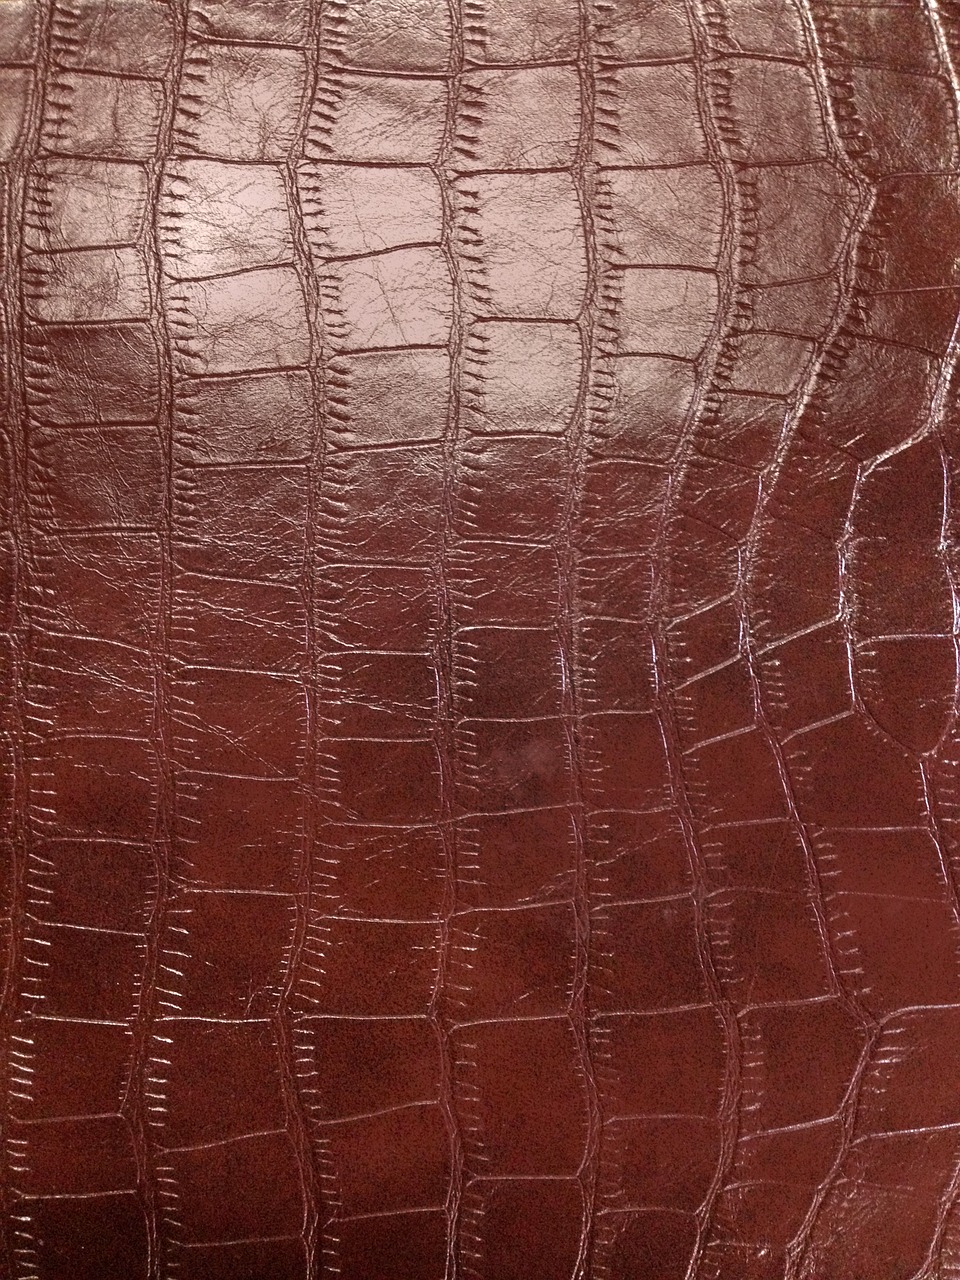 leather snake skin texture free photo